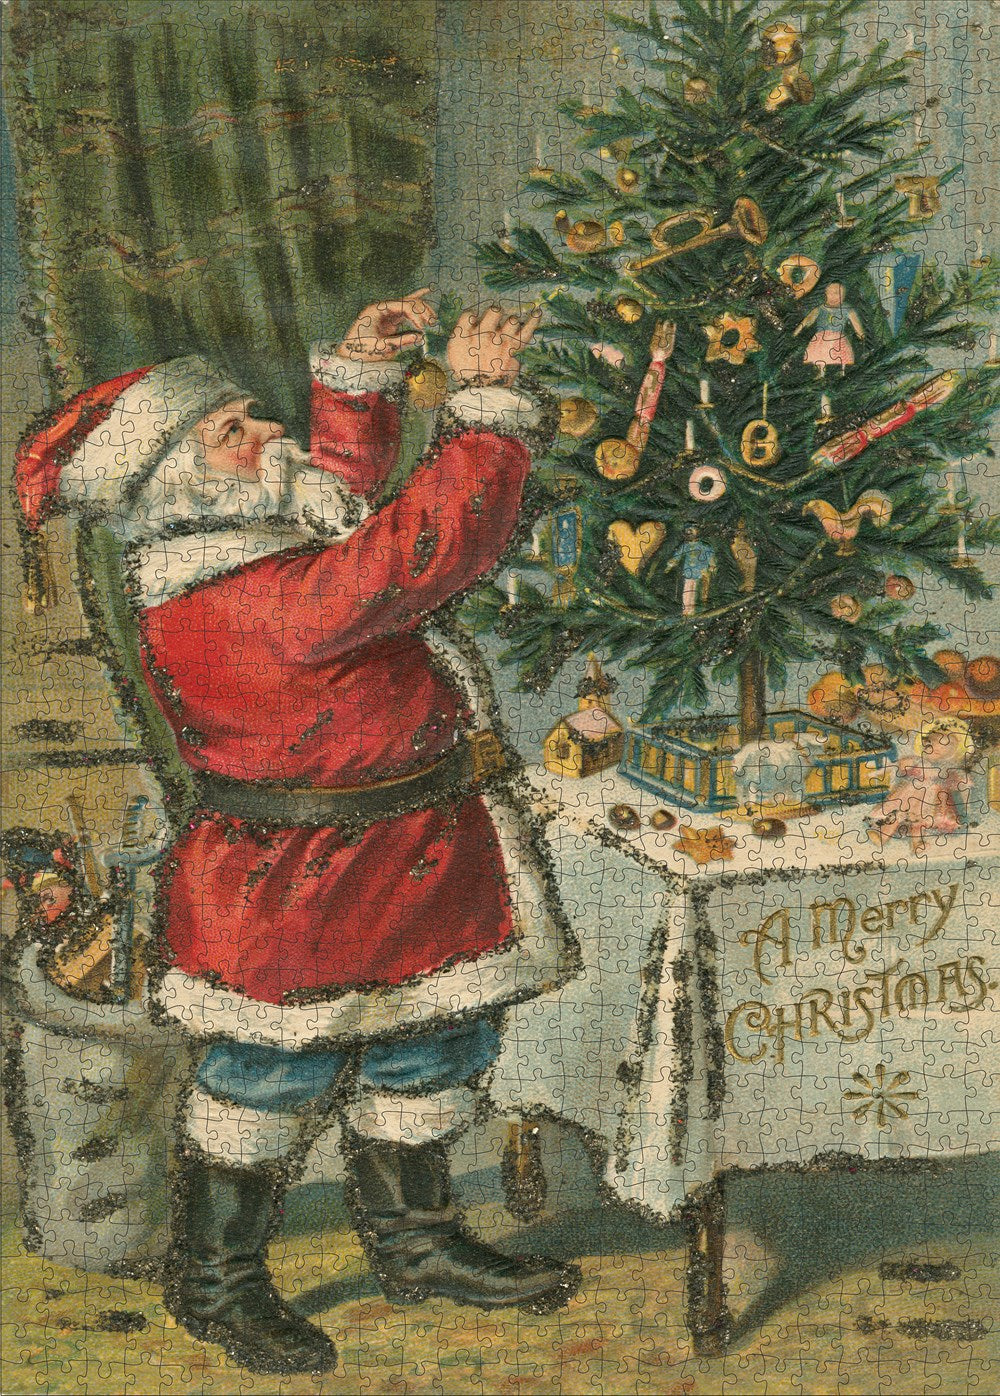 Santa Trims the Tree 1,000 Piece Puzzle